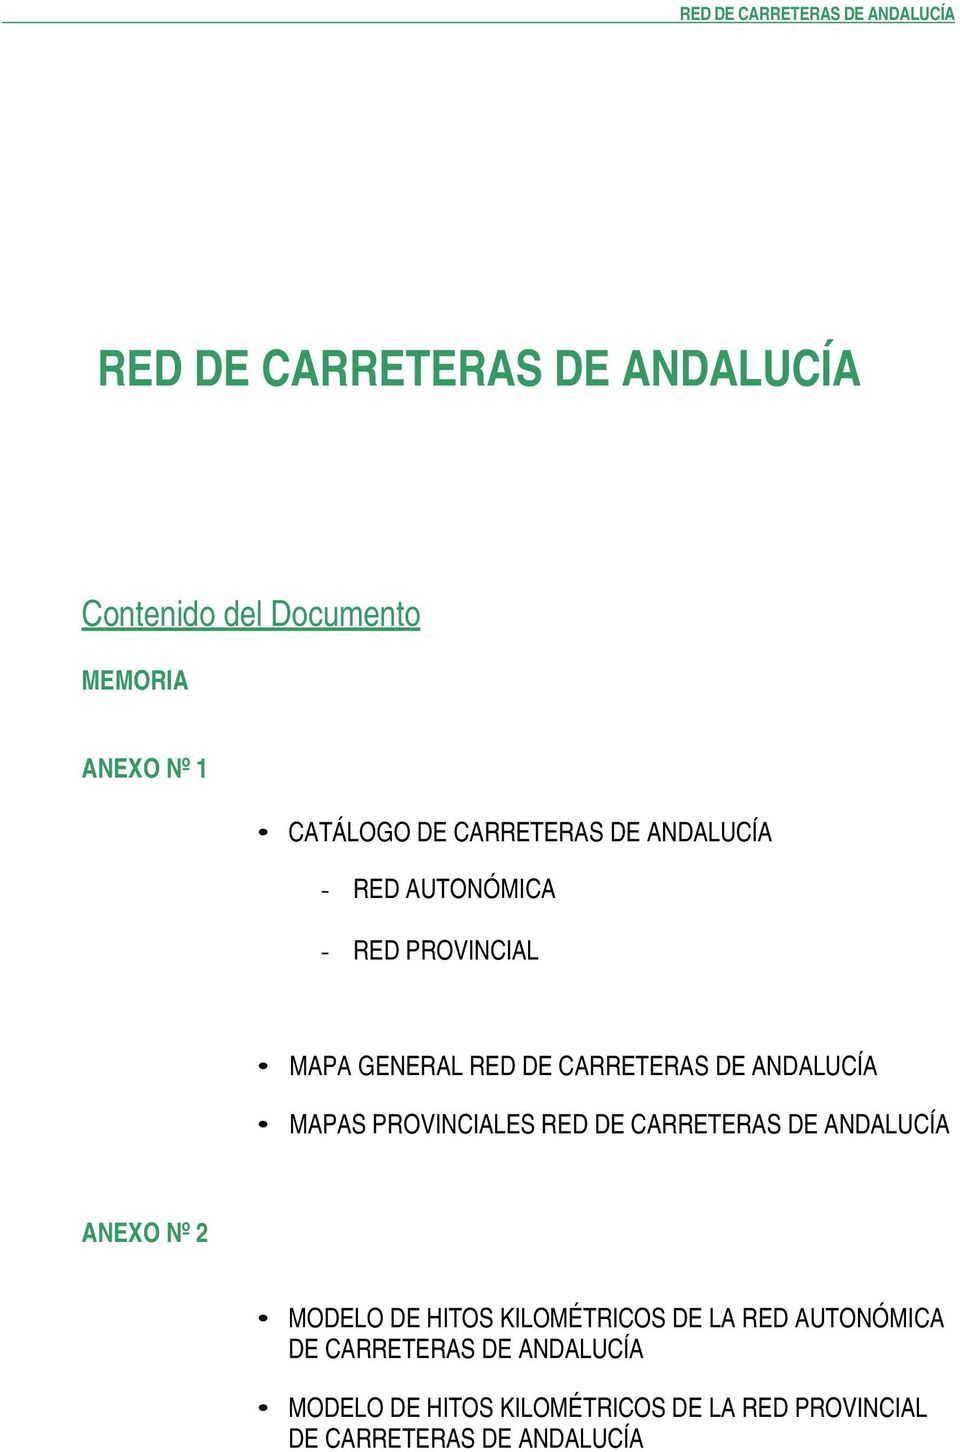 ANDALUCÍA MAPAS PROVINCIALES RED DE CARRETERAS DE ANDALUCÍA ANEXO Nº 2 MODELO DE HITOS KILOMÉTRICOS DE LA